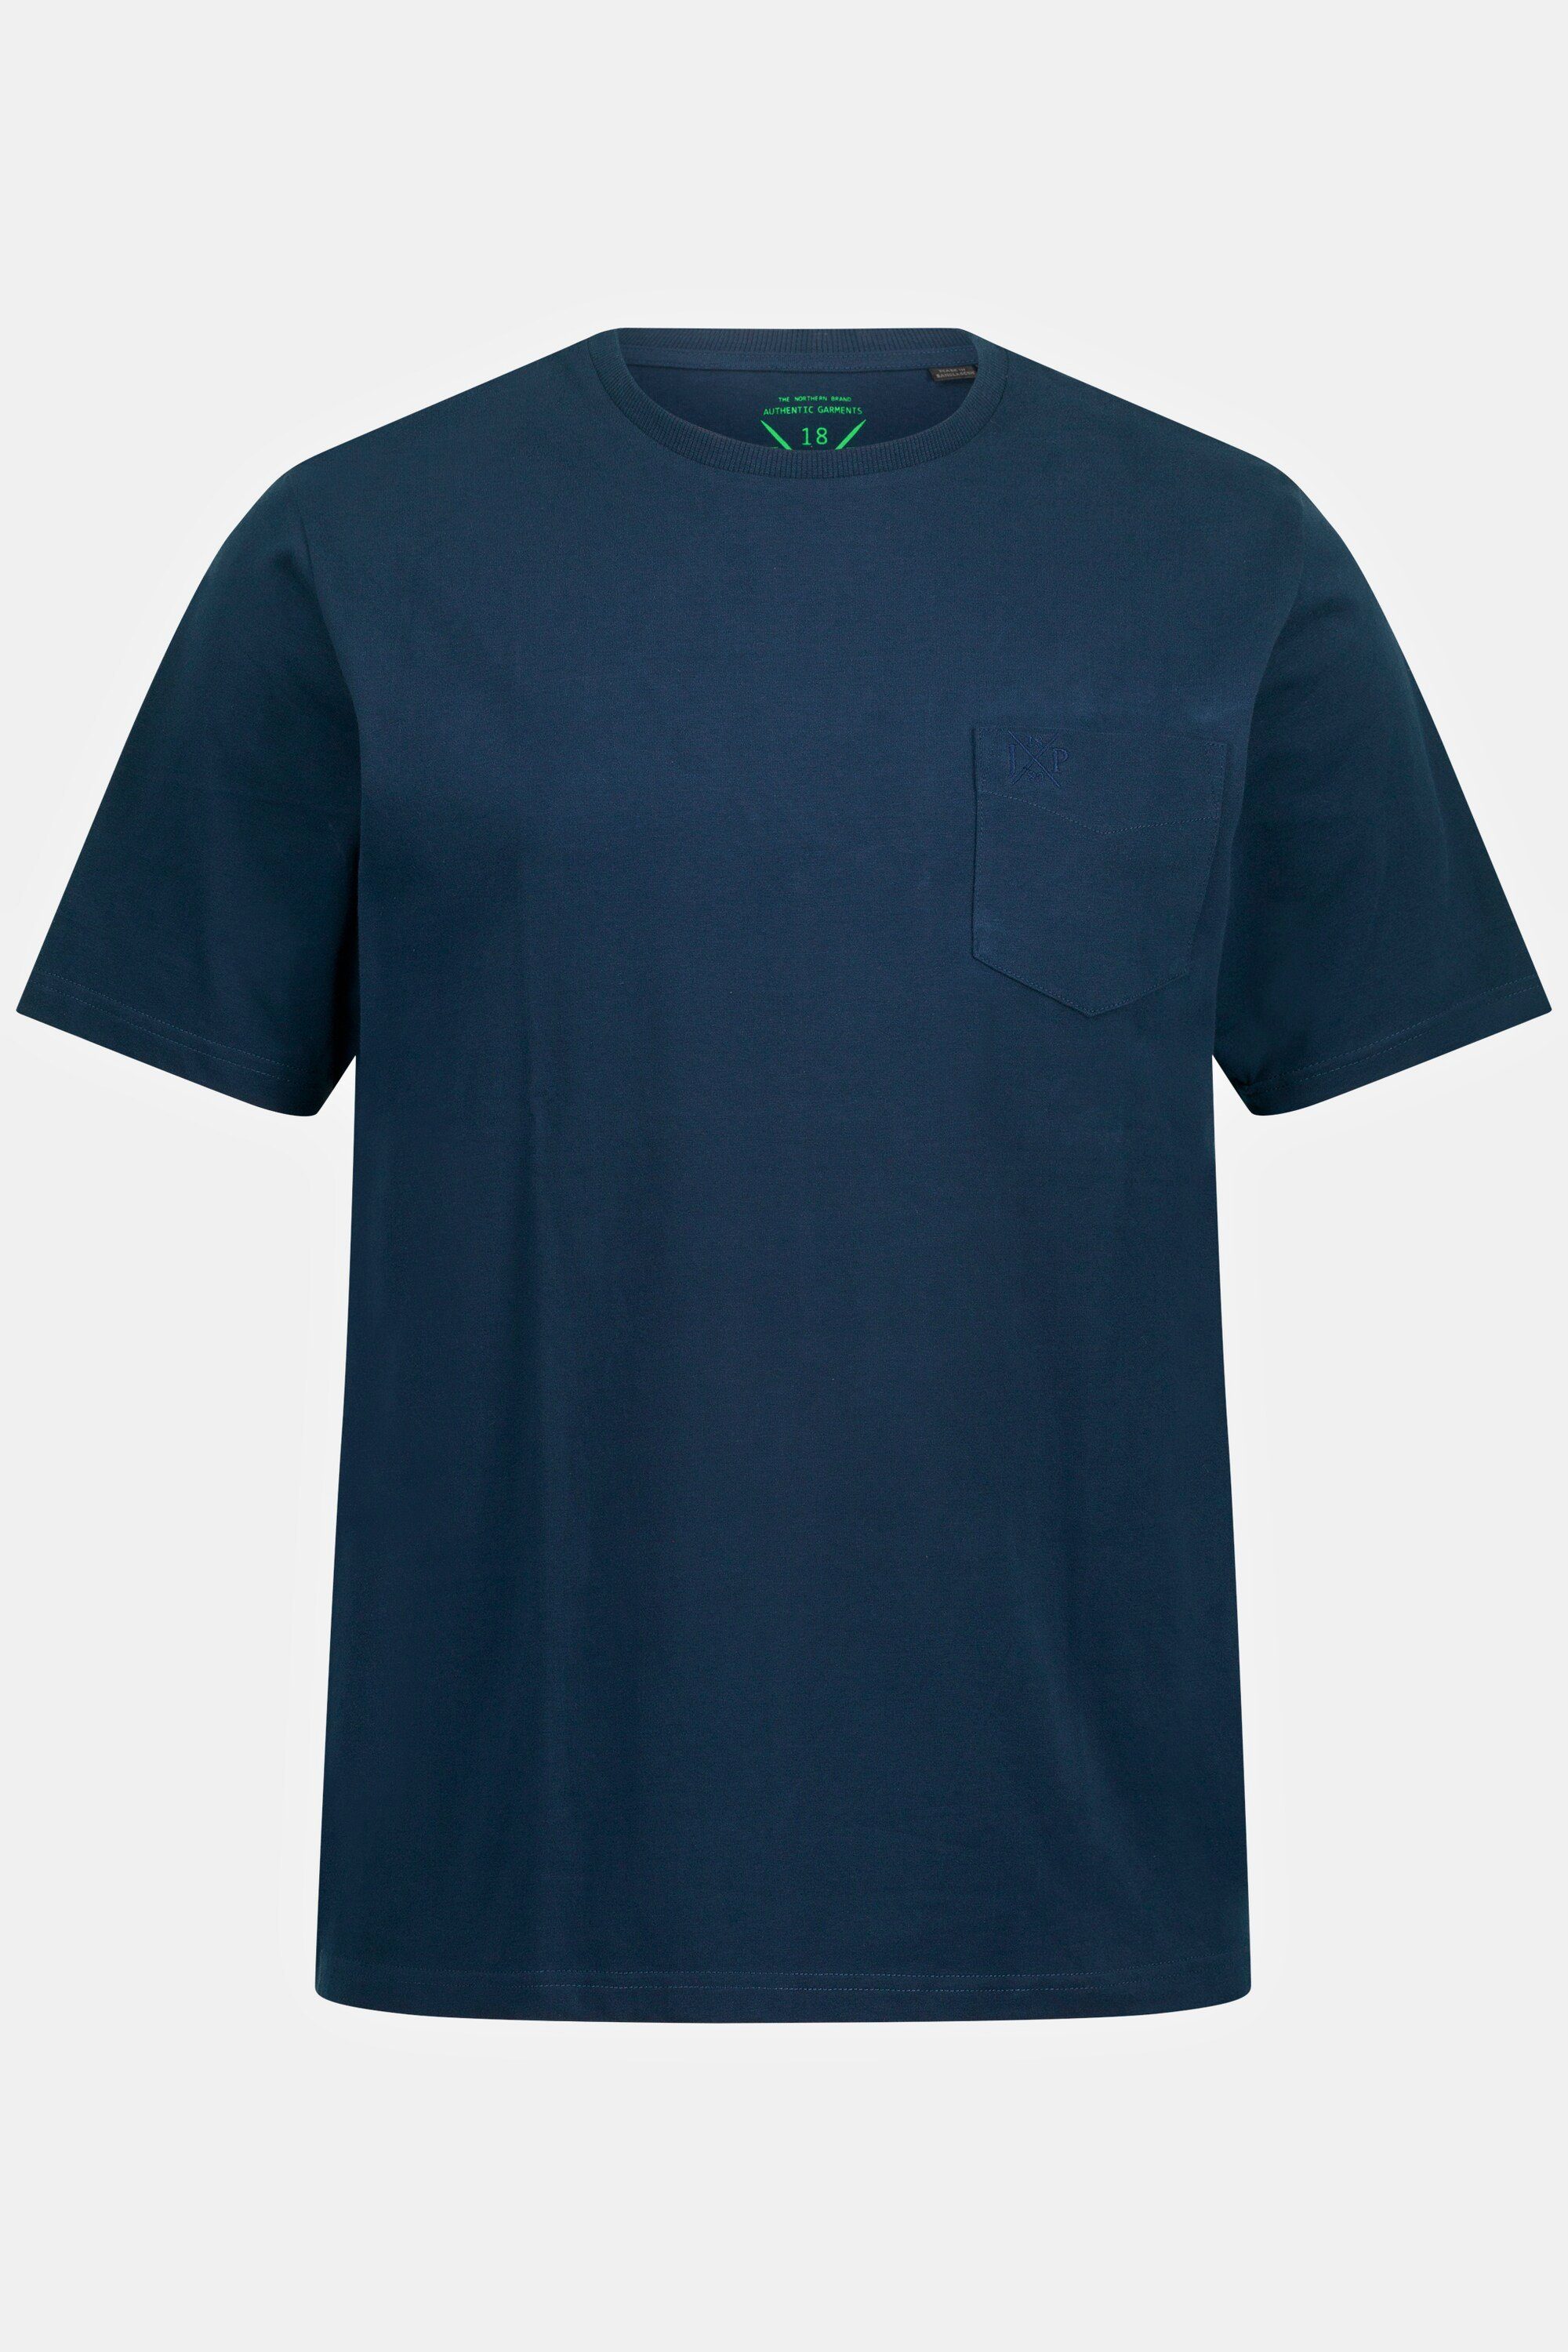 Print Shirt Schlafanzug Schlafanzug JP1880 Homewear mit Shorts uni